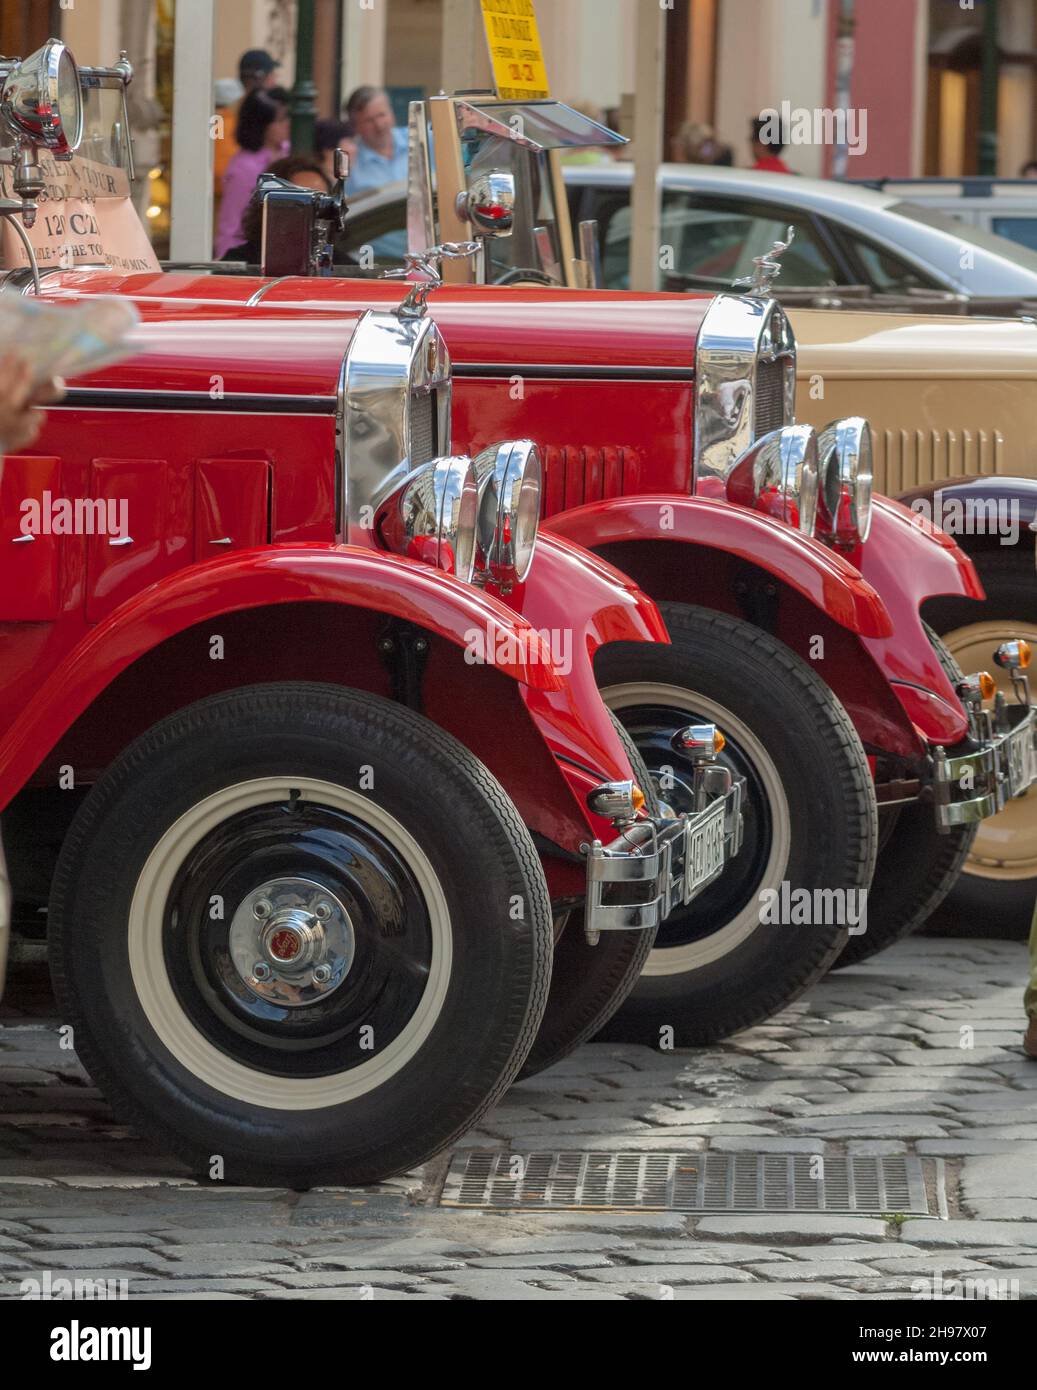 Classic Praga sightseeing tour cars await custom in Prague's Old Town Square, Stock Photo